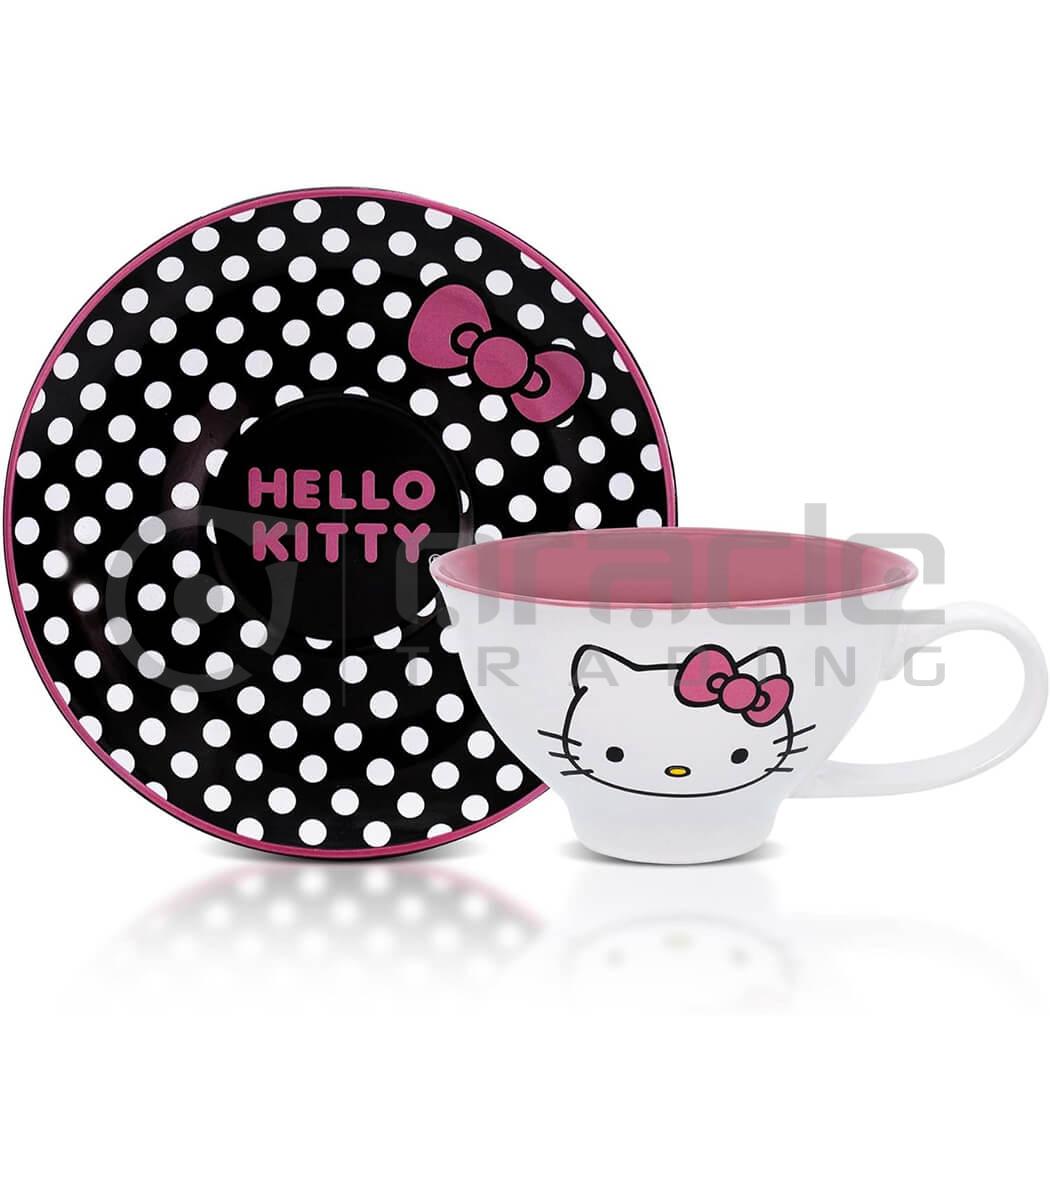 teacup saucer set hello kitty tss008 b